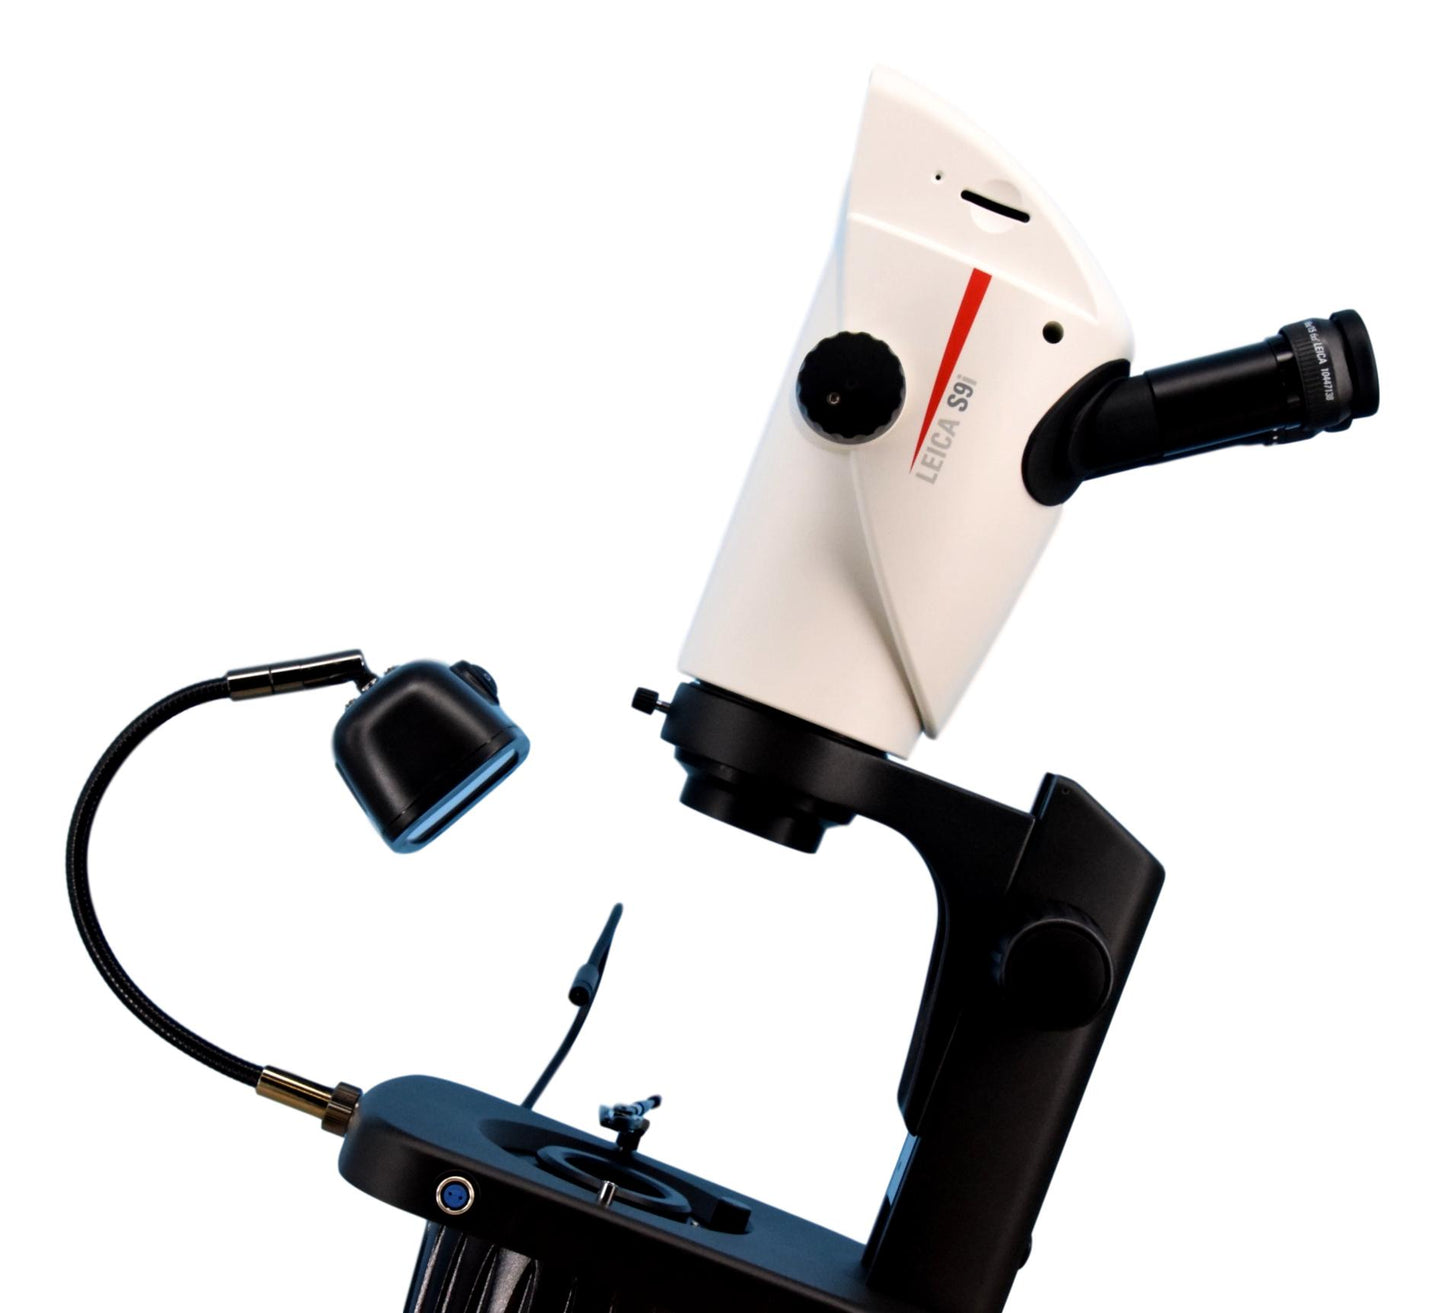 Leica S9i Gemological Jewelers Microscope 9.8x - 88x Magnification